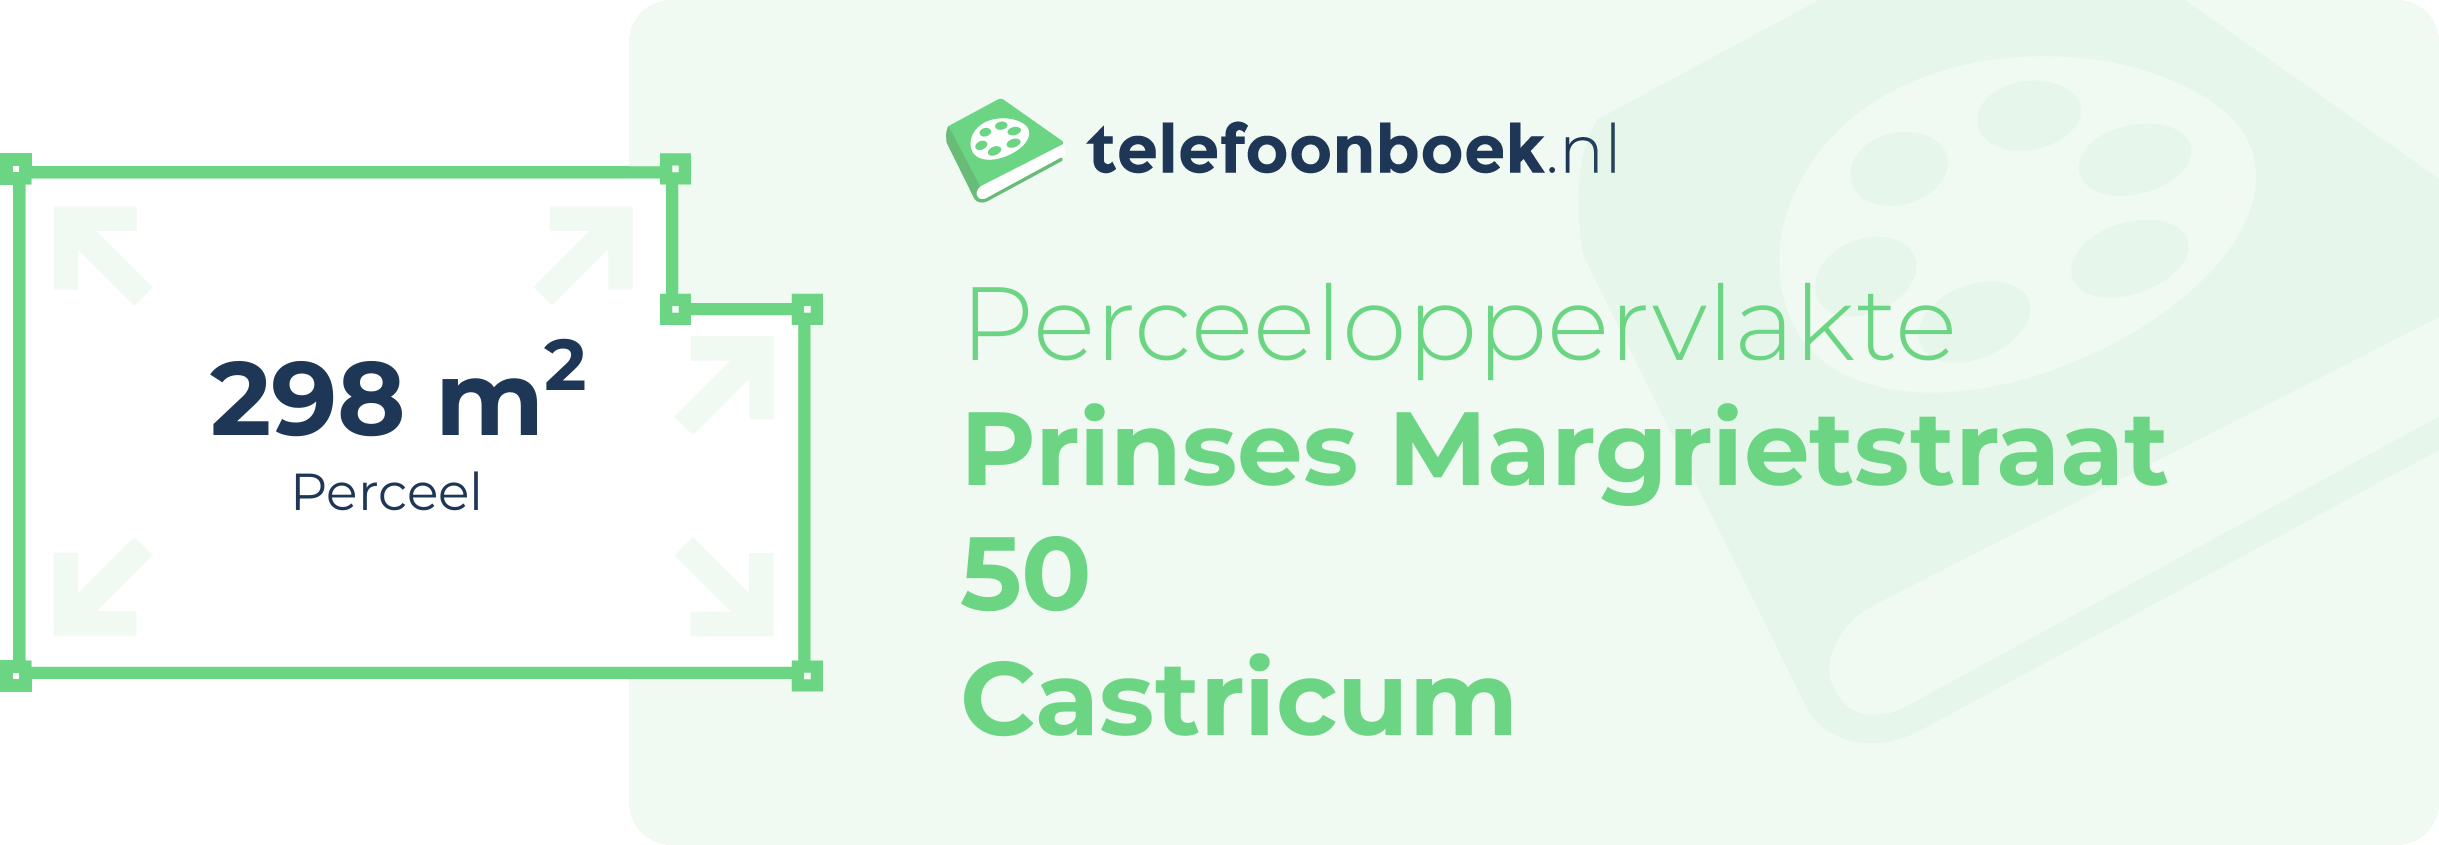 Perceeloppervlakte Prinses Margrietstraat 50 Castricum